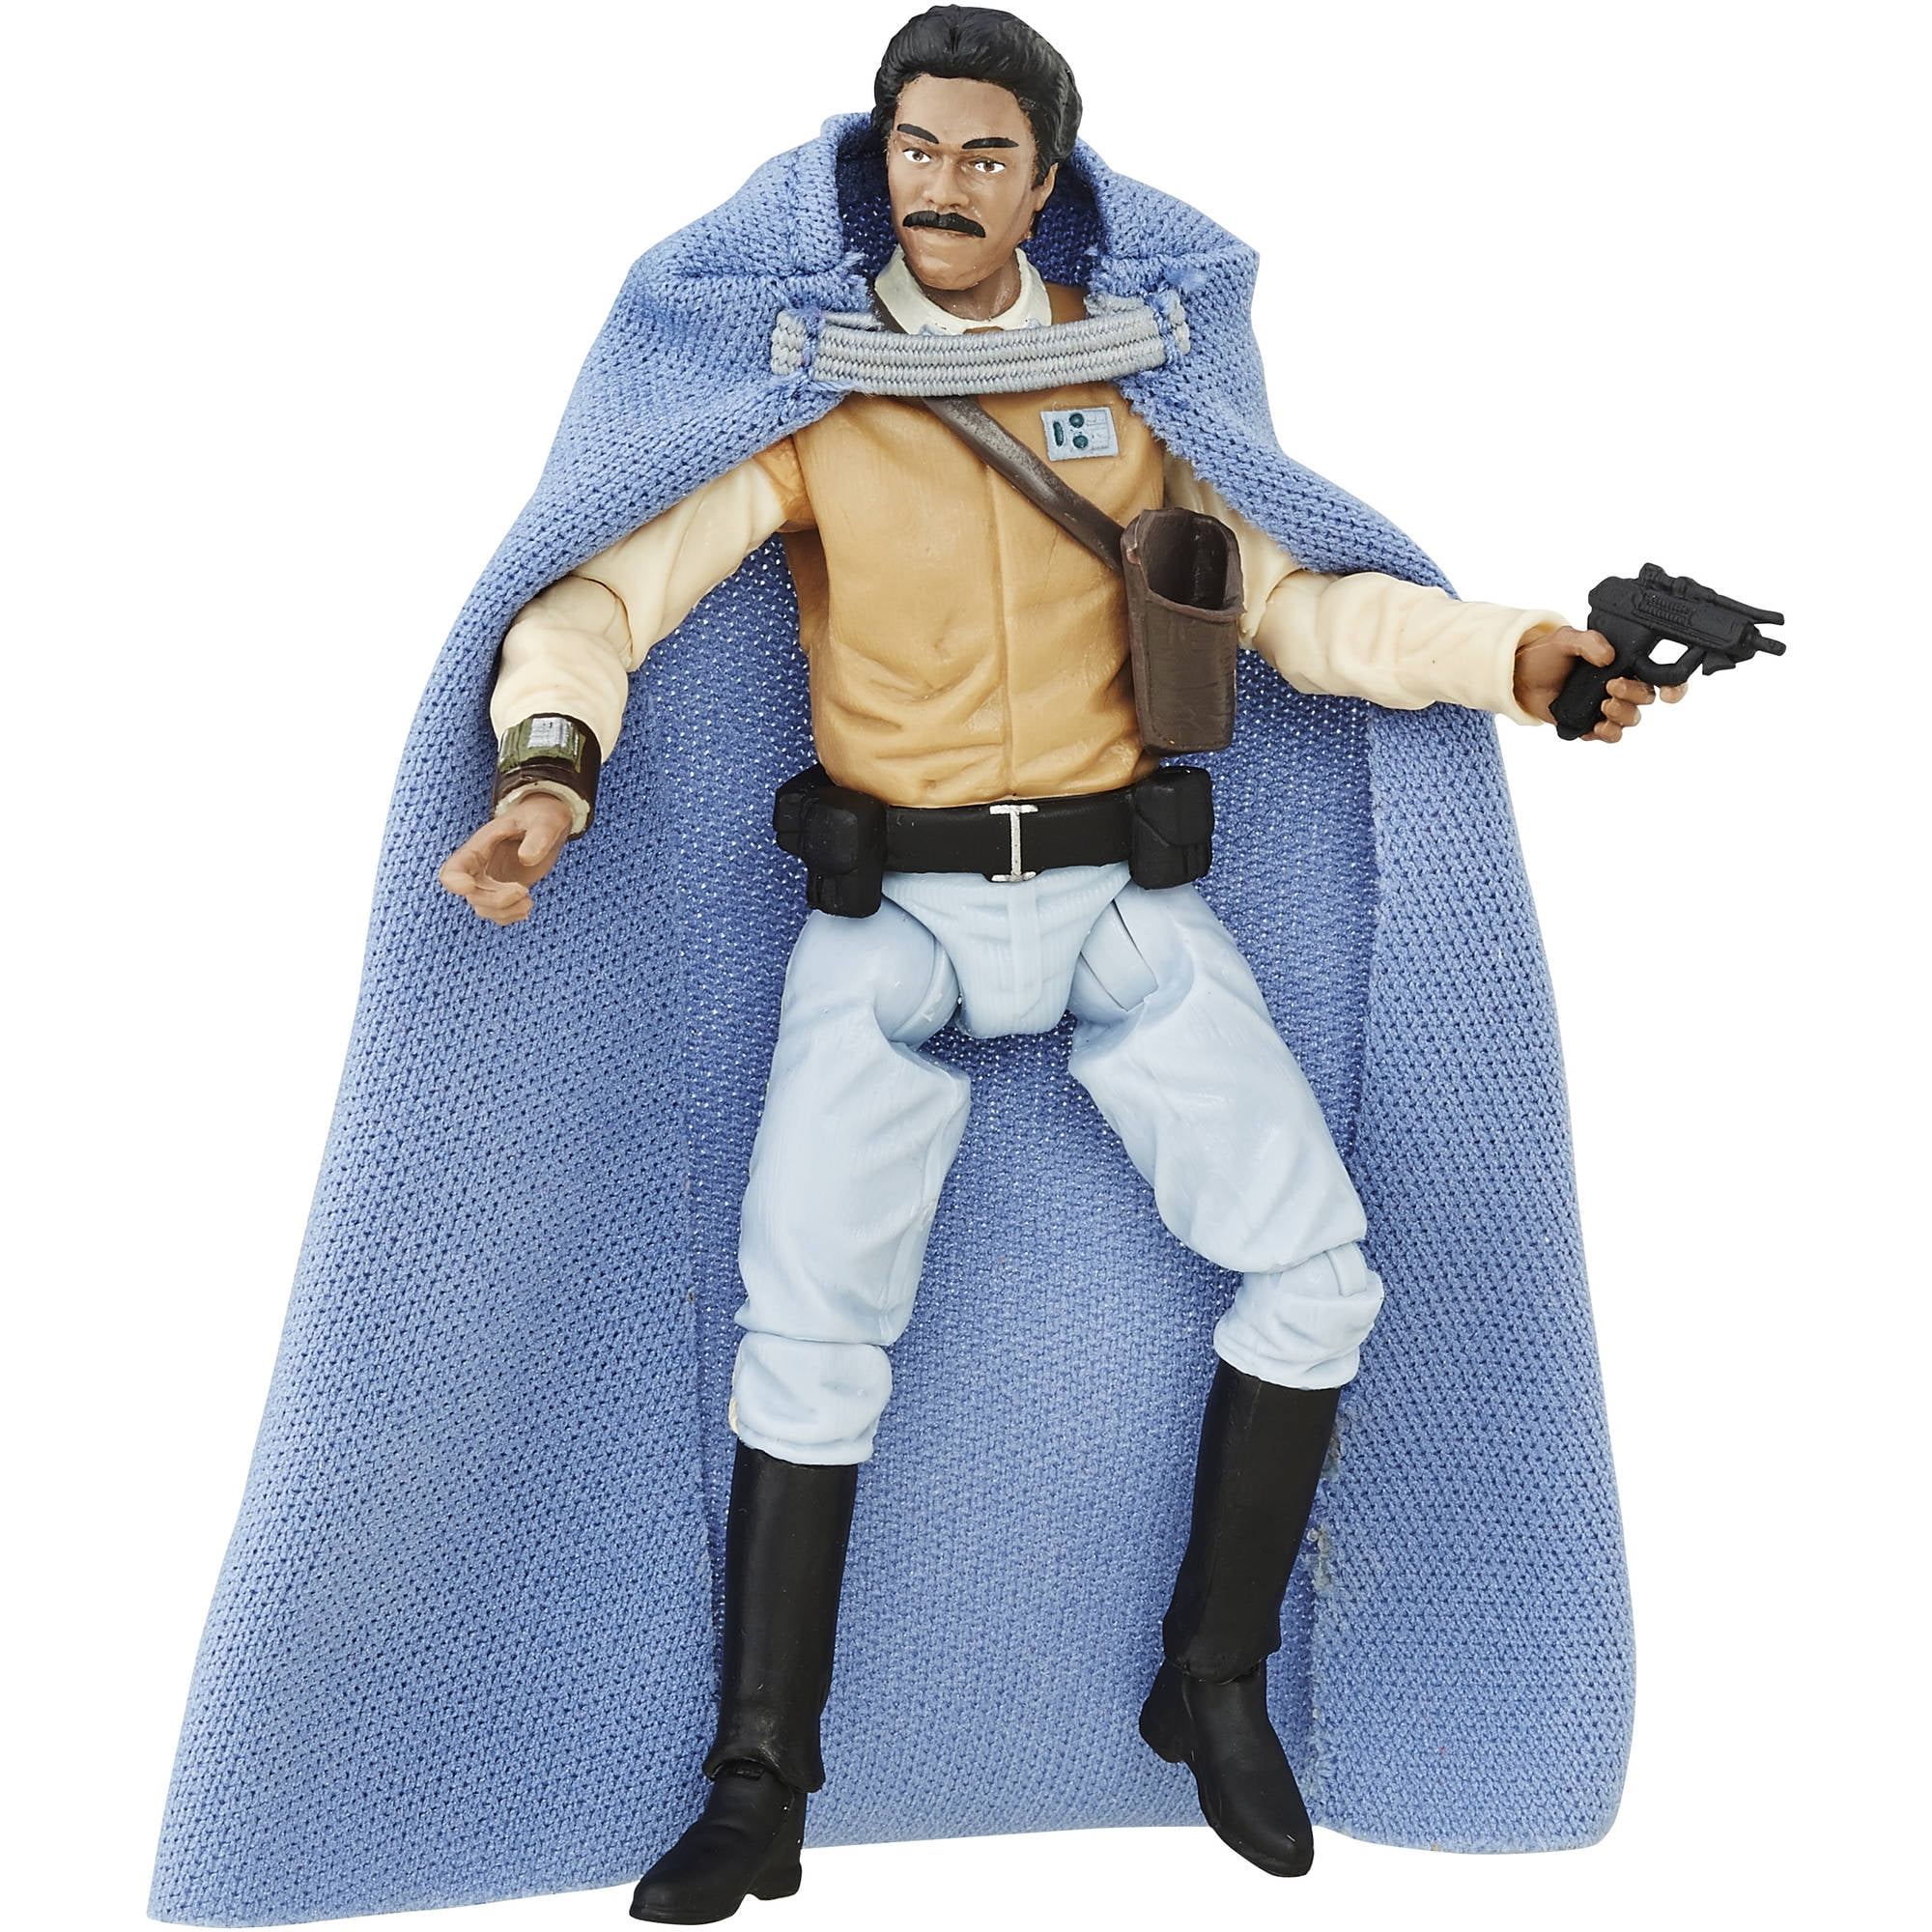 Disney Hasbro Star Wars The Black Series Lando Calrissian Collectible Figure NEW 